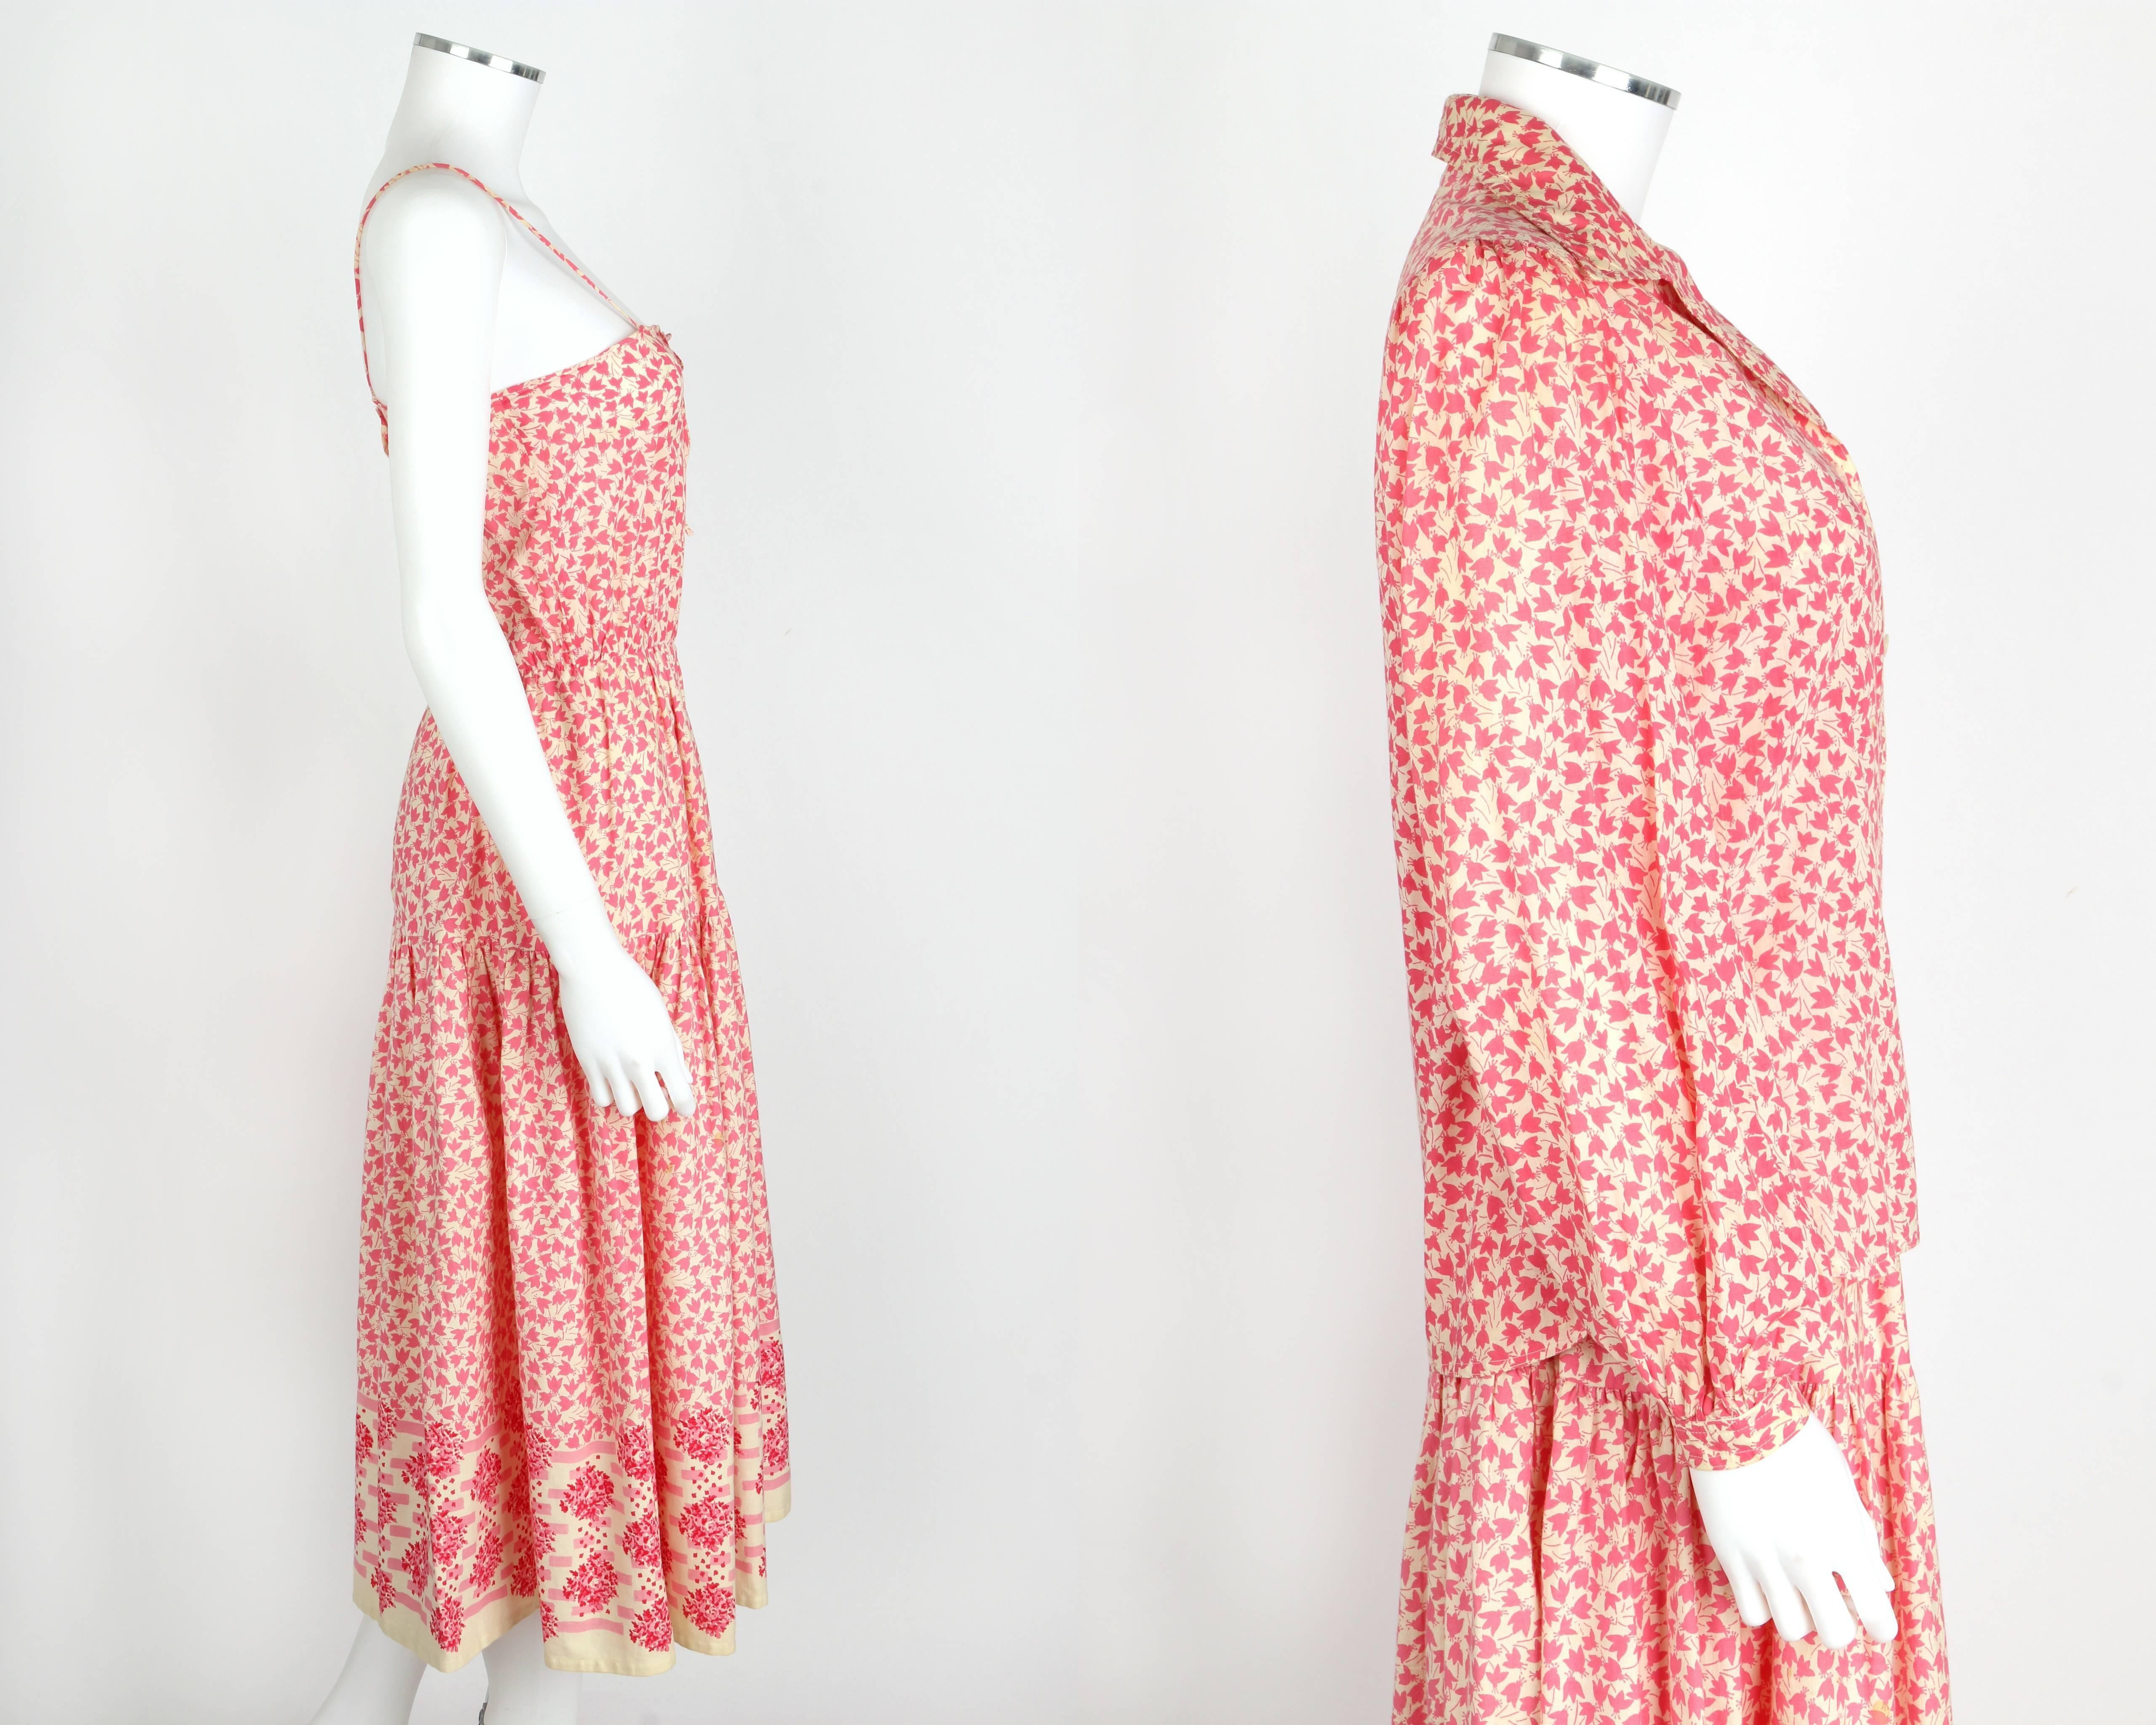 OSCAR de la RENTA 1970s Ivory Pink Floral Cotton Sundress Top Scarf Belt Set 6 1